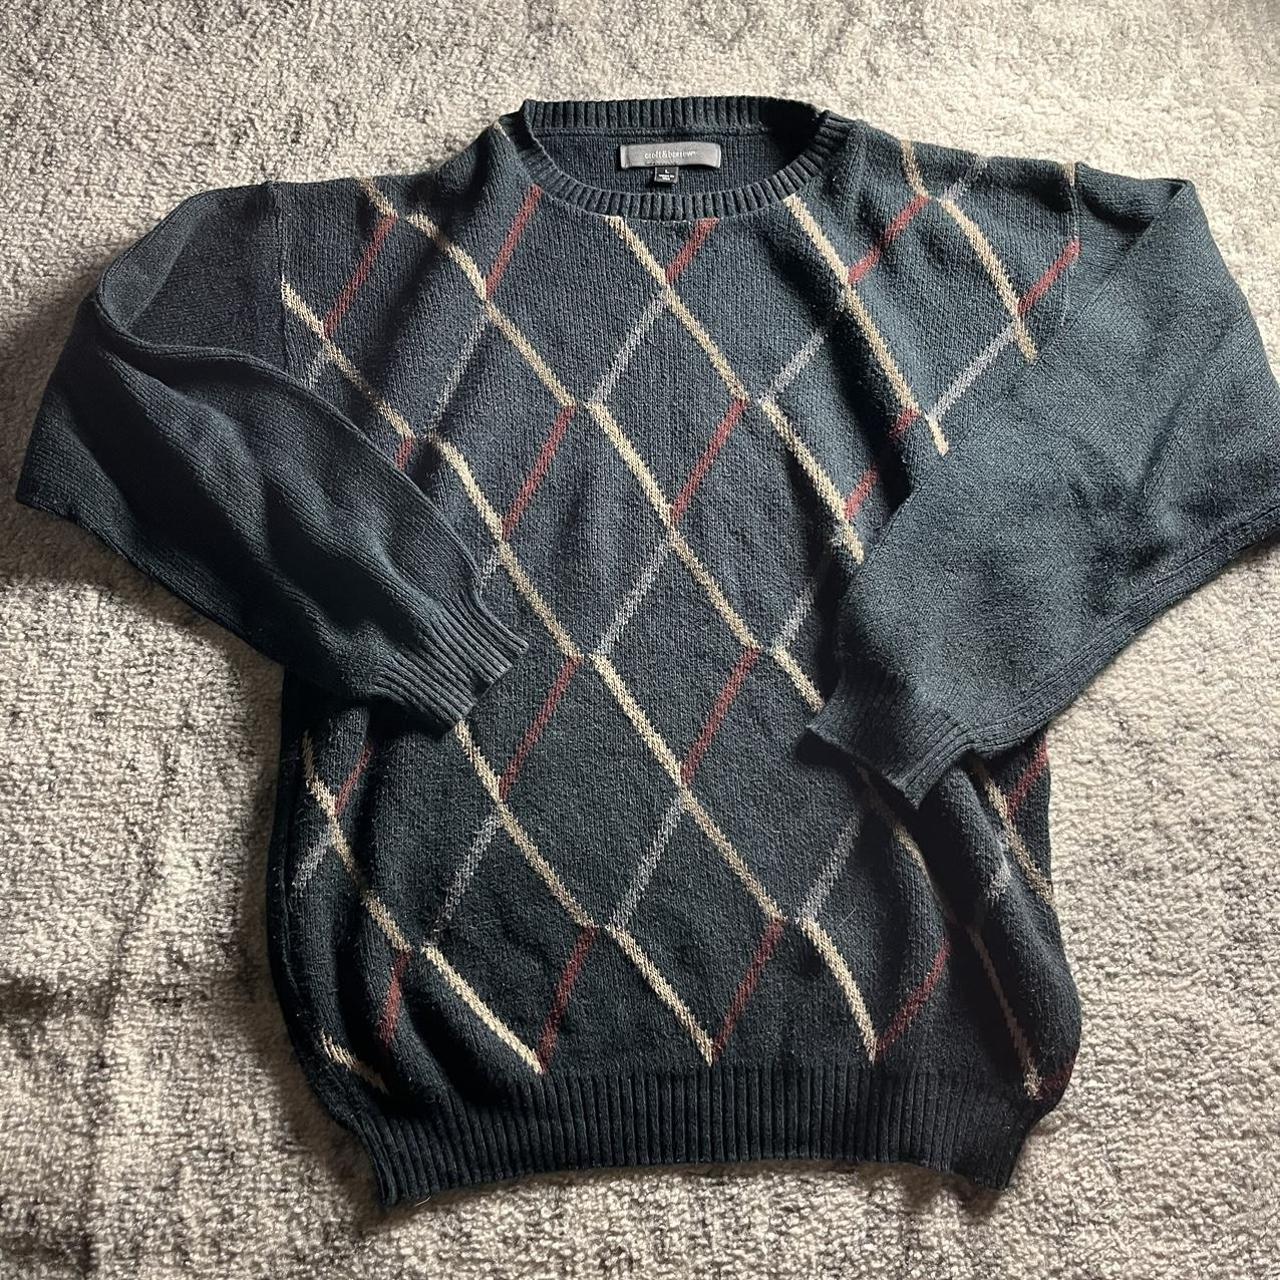 Vintage “Chanel” Spellout Sweater No label - Depop